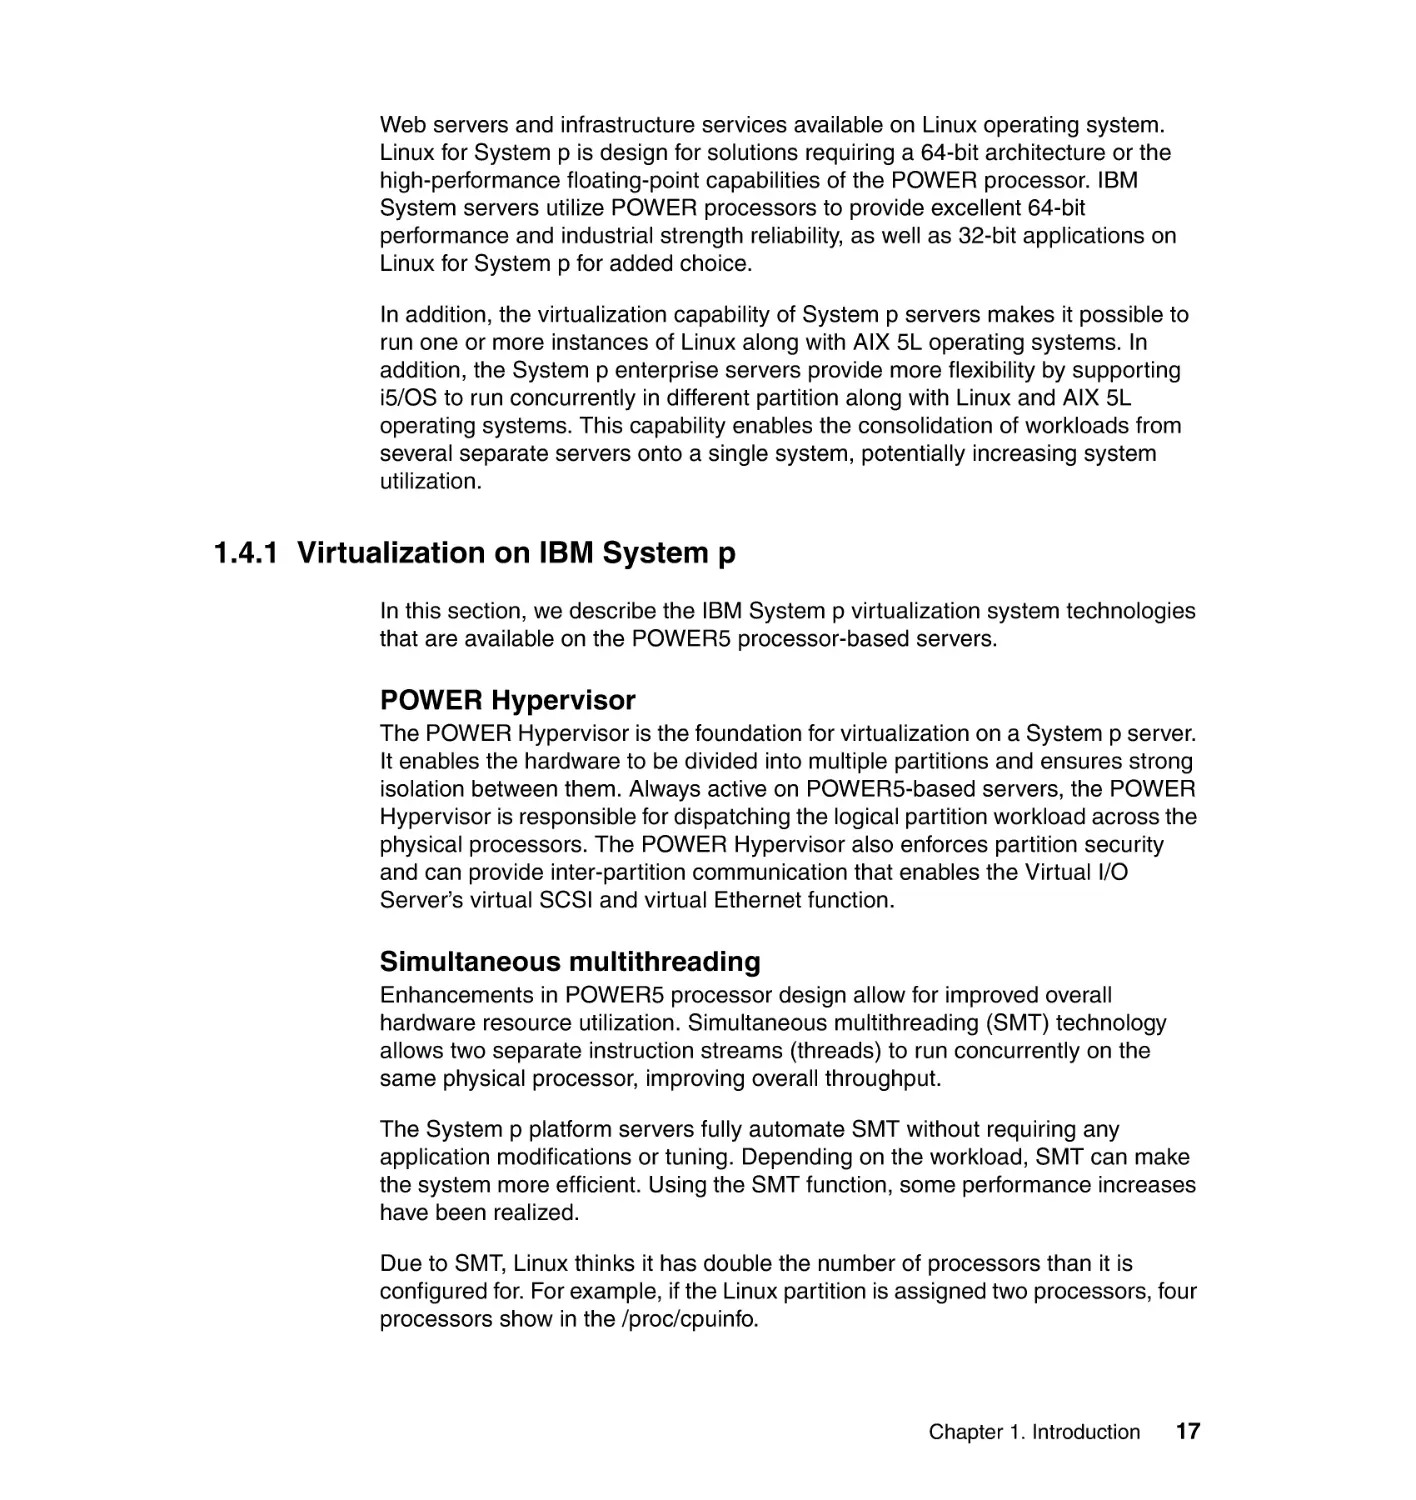 1.4.1 Virtualization on IBM System p